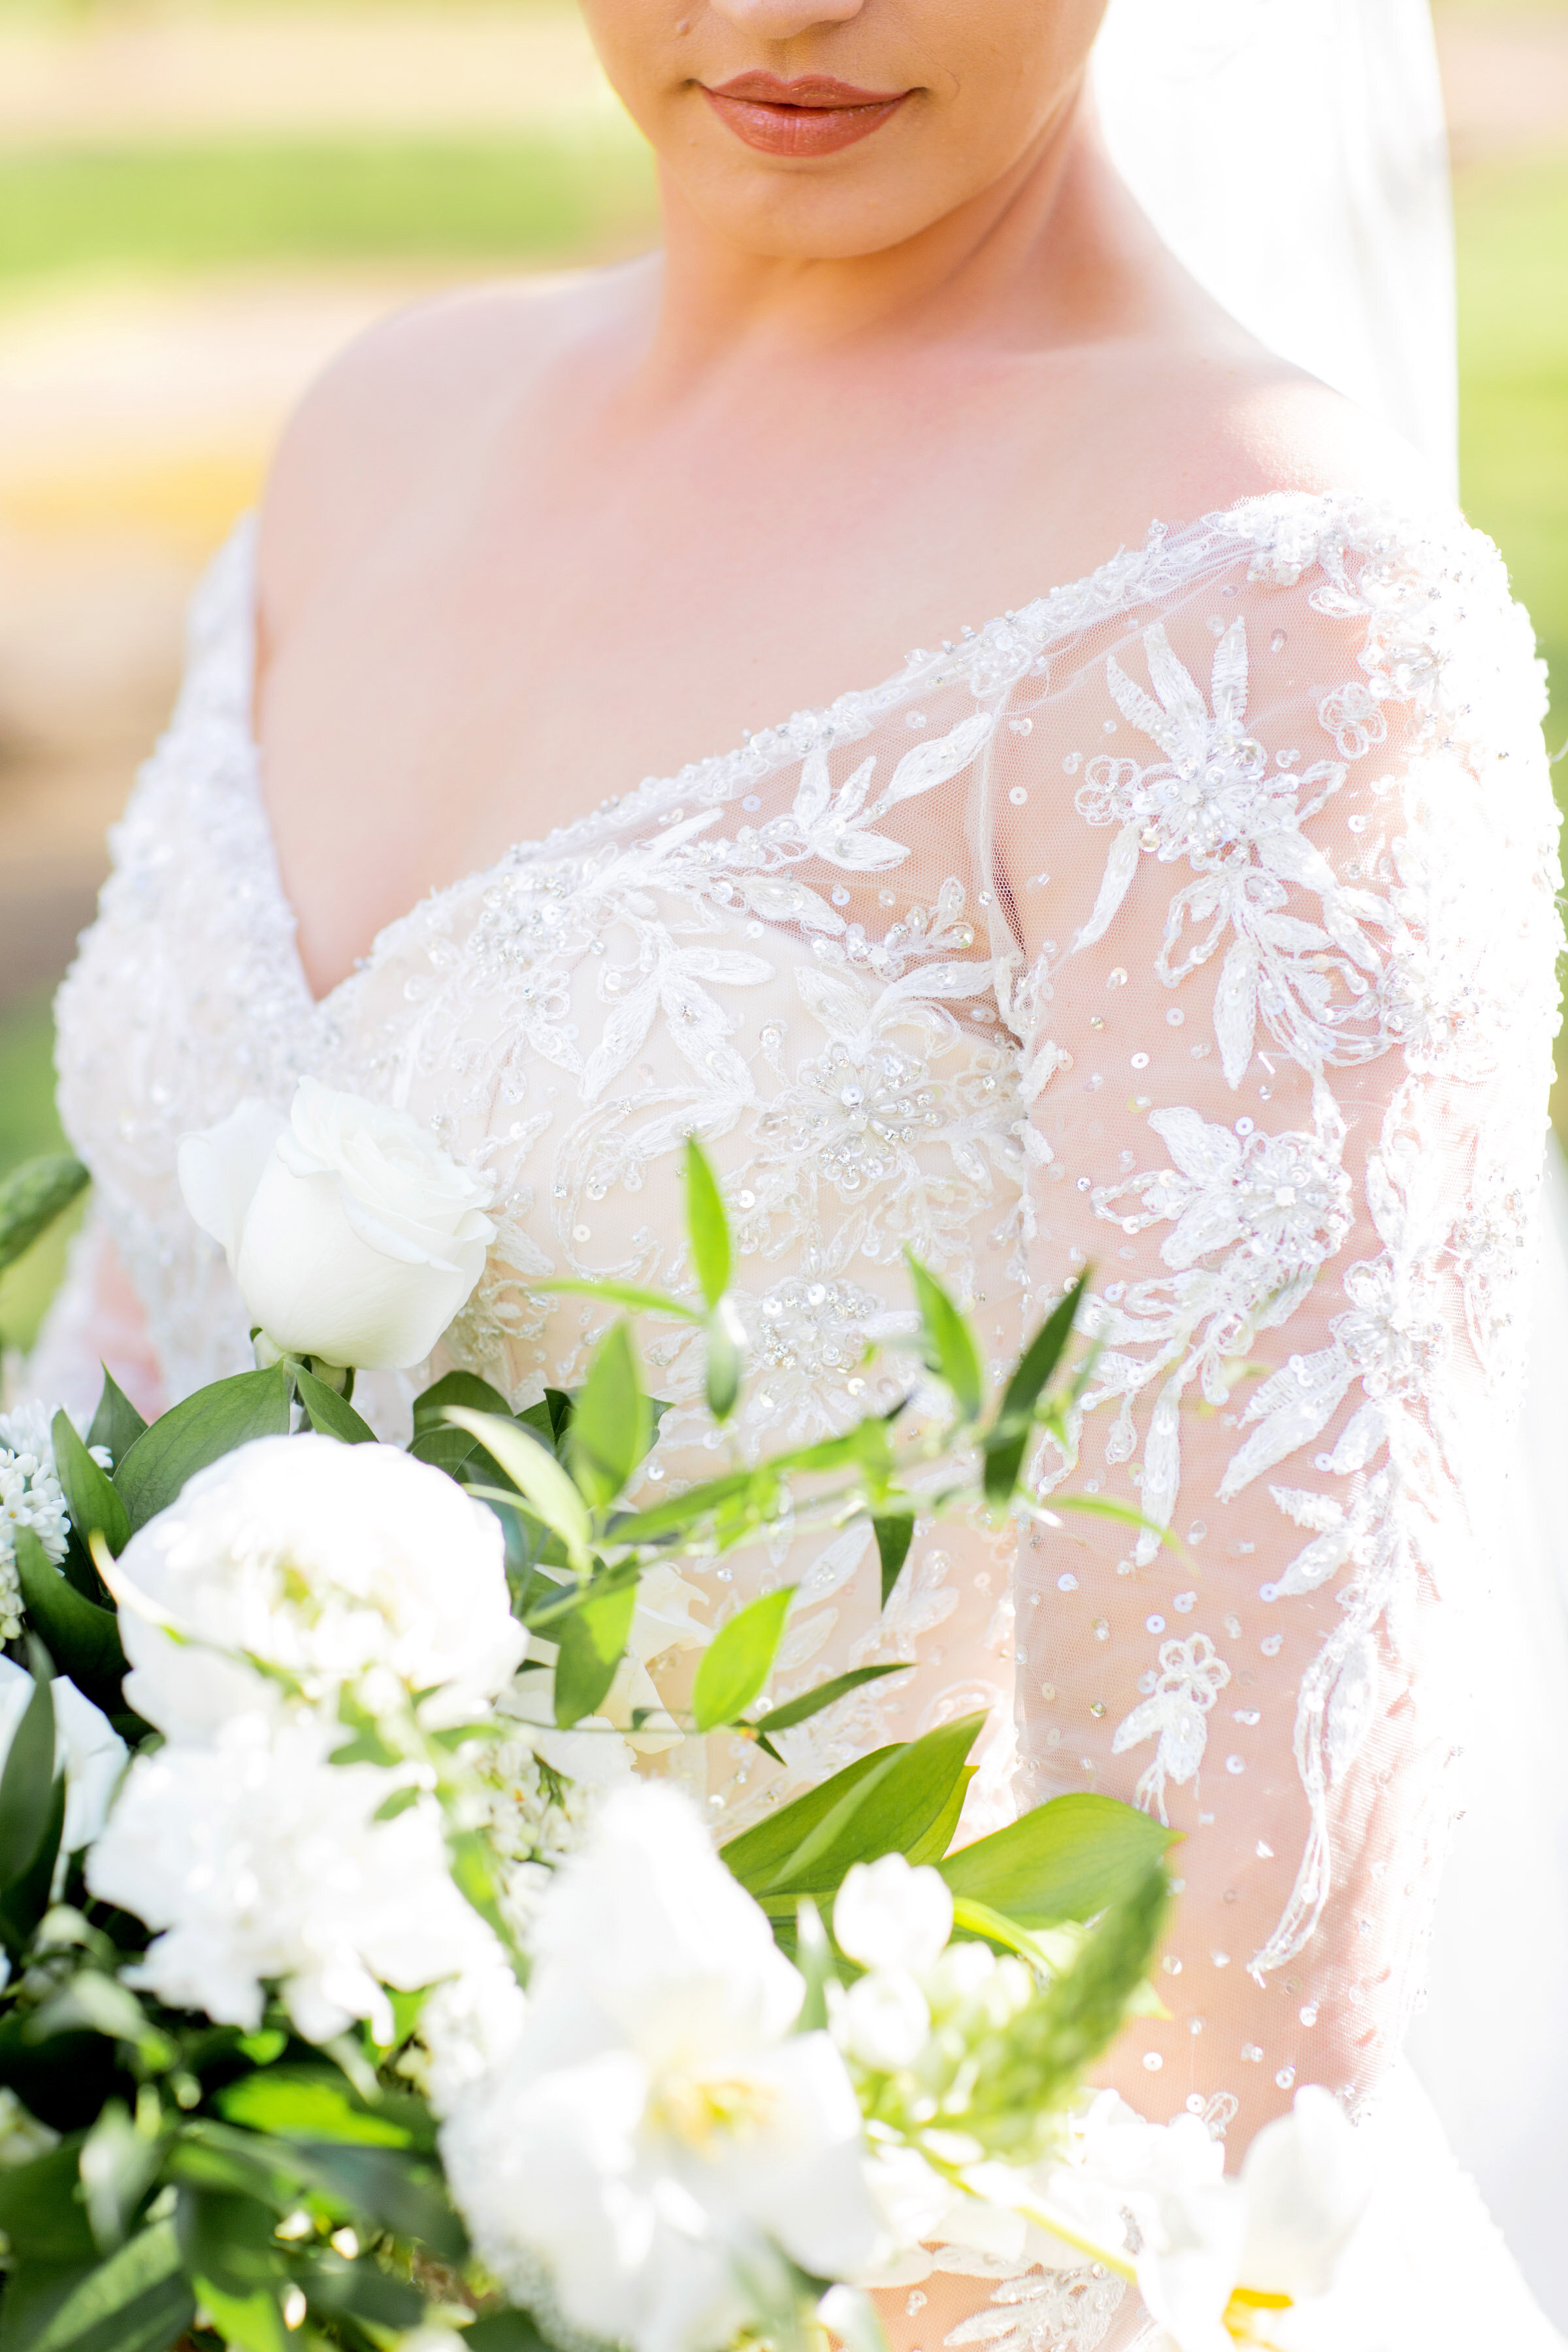 ALMOND-ORCHARD-WEDDING-PHOTOS-BROOKE-TOBIN-PHOTOGRAPHY_069.jpg